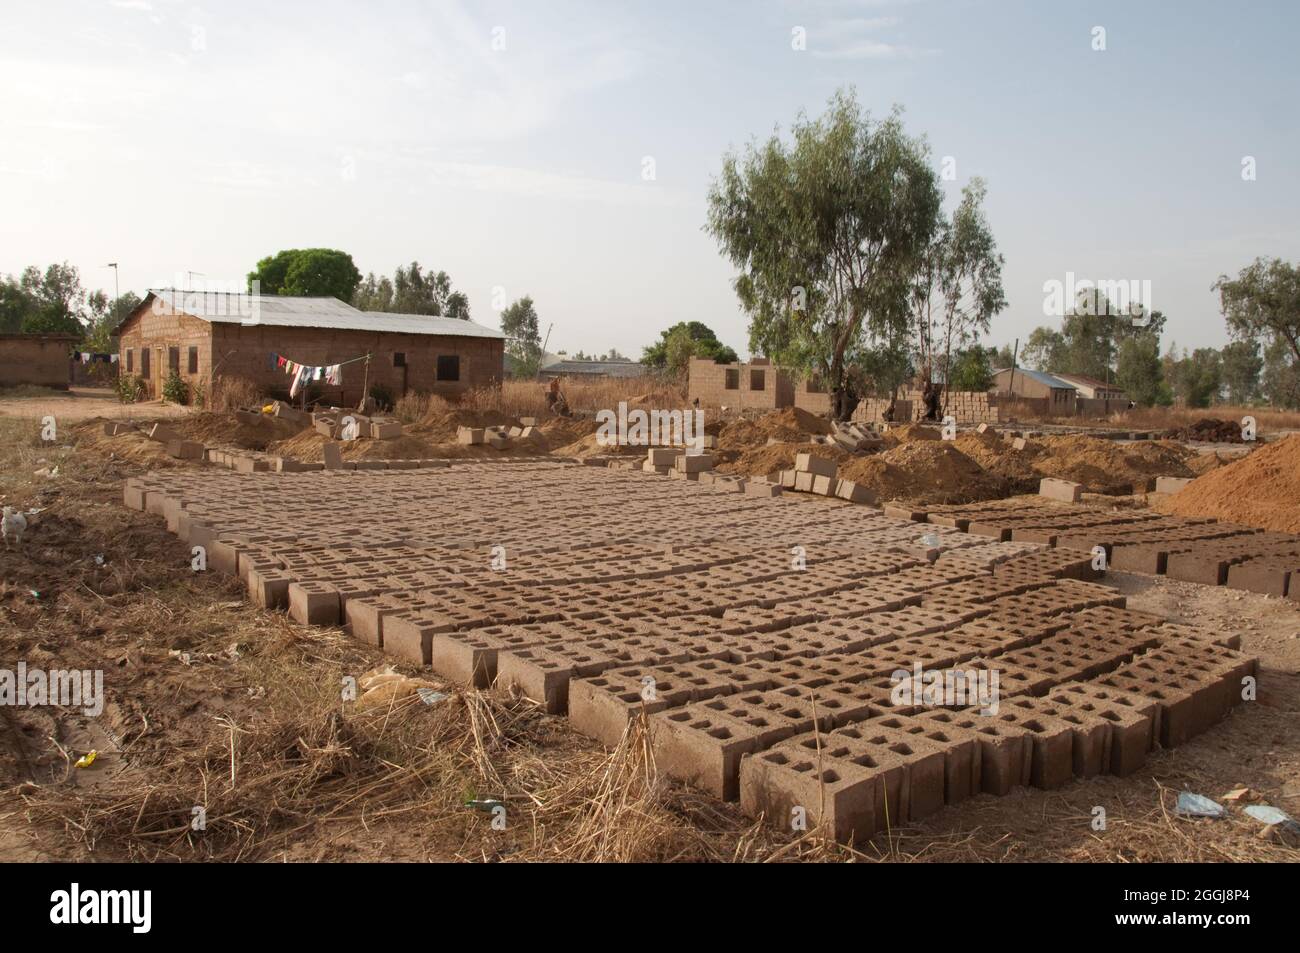 Fabbrica di produzione di mattoni, Stato di Kaduna, Nigeria, Africa - mattoni che asciugano al sole Foto Stock